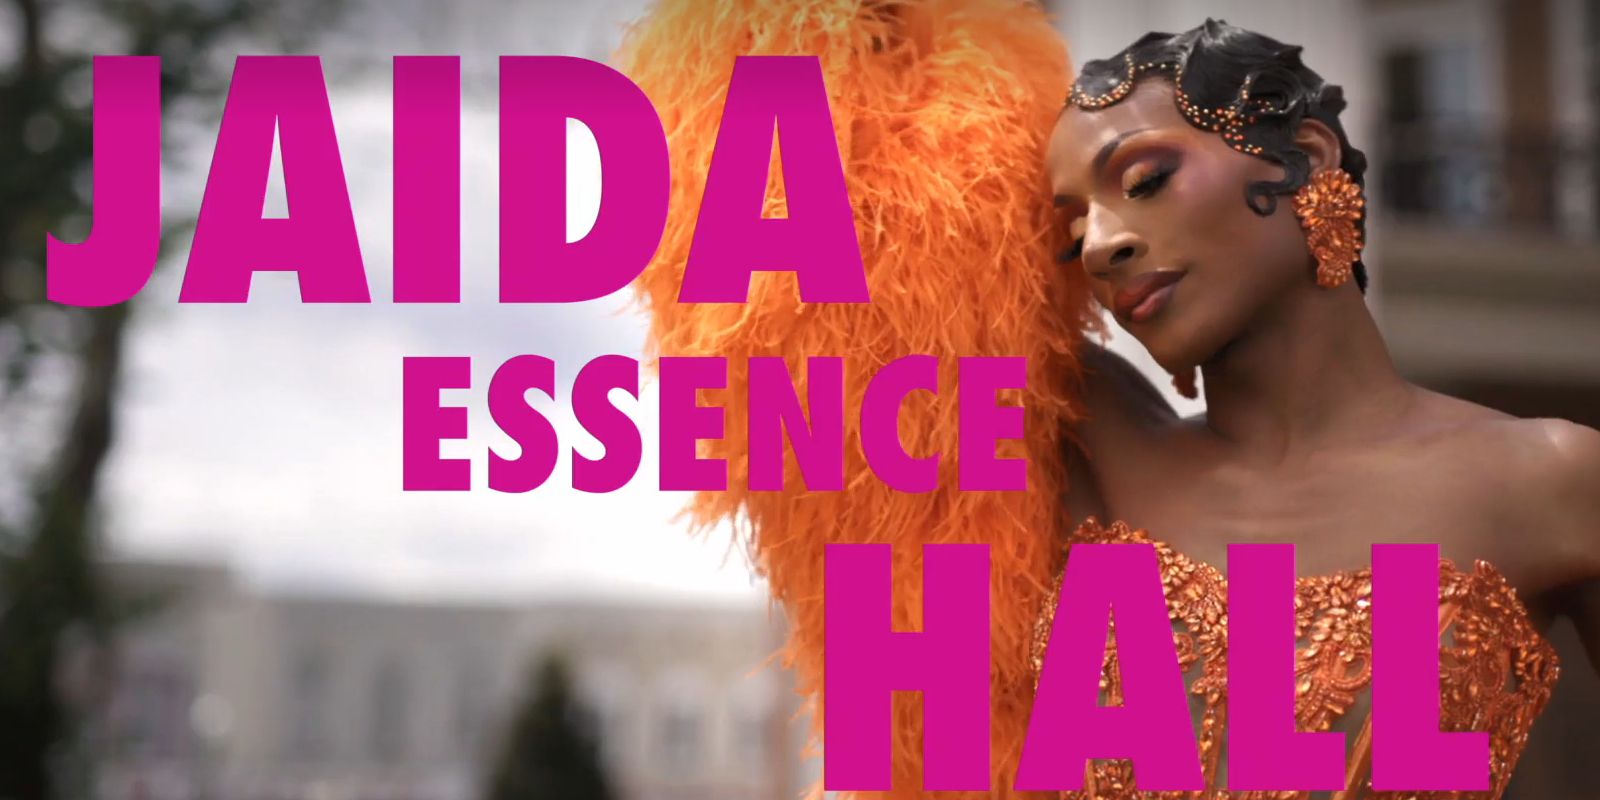 Jaida Essence Hall in We're Here Season 4 Trailer